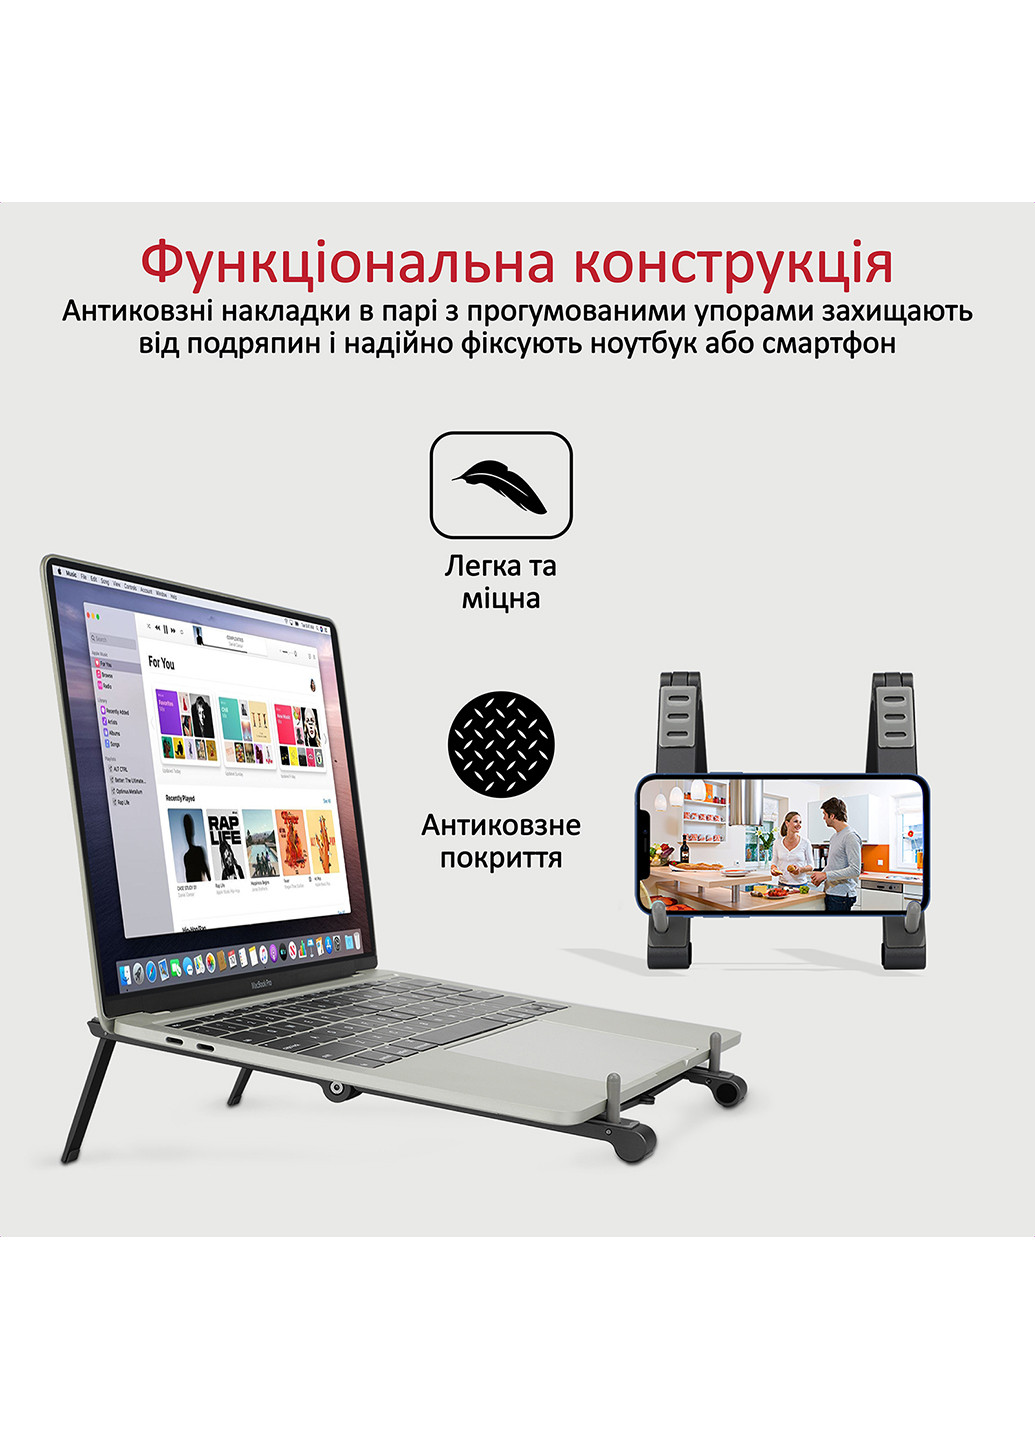 Подставка для ноутбука, планшета или смартфона Elevate Promate elevate.black (218988352)